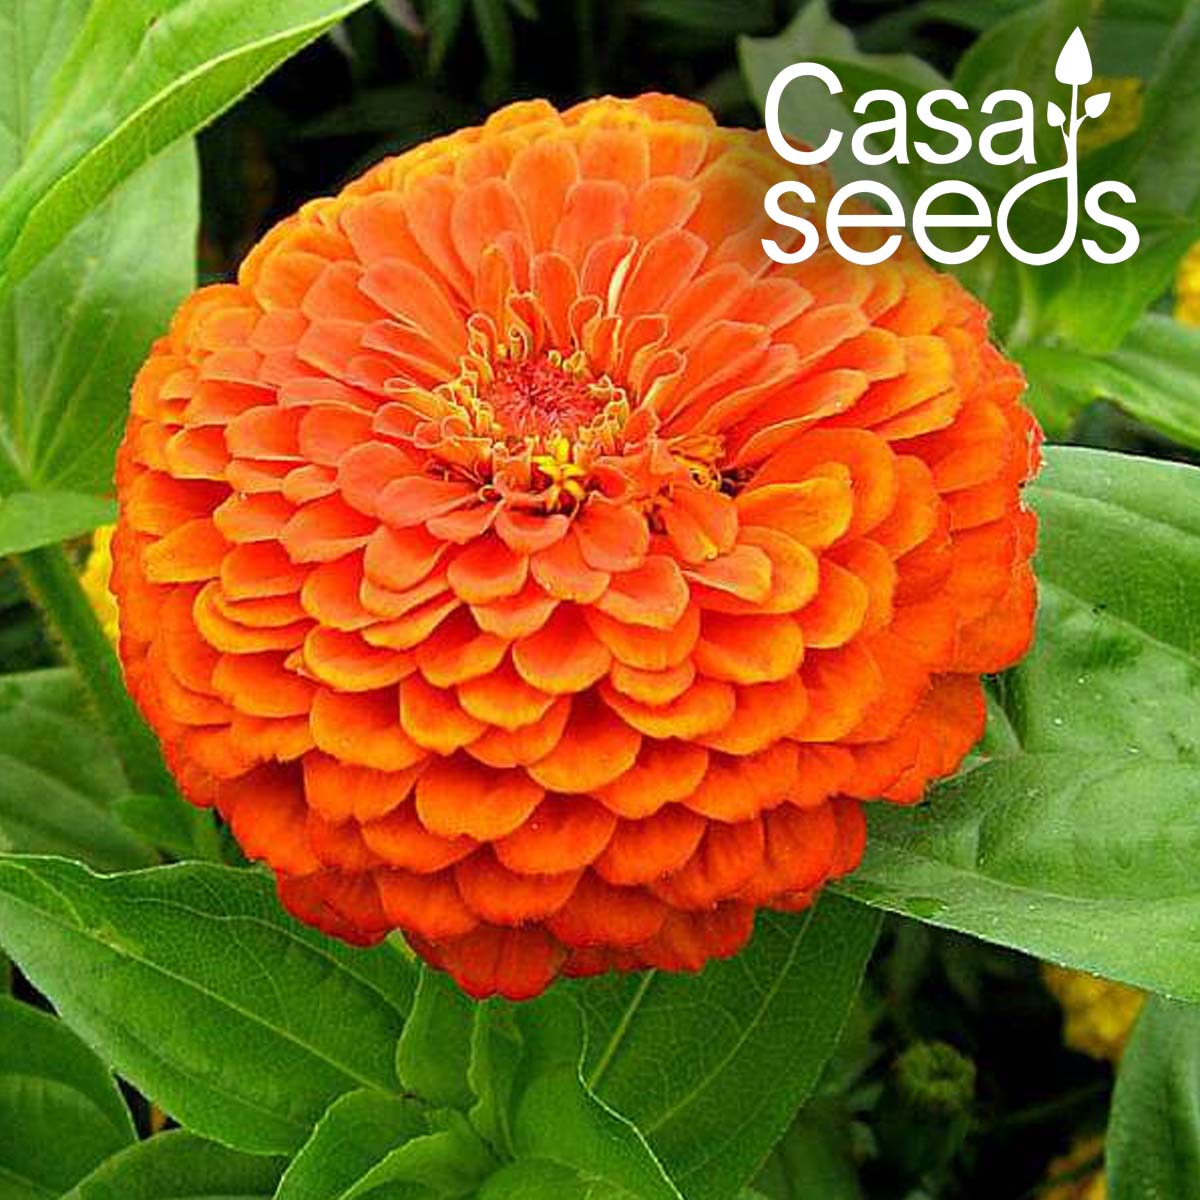 Zinnia Orange King- 100 Seeds